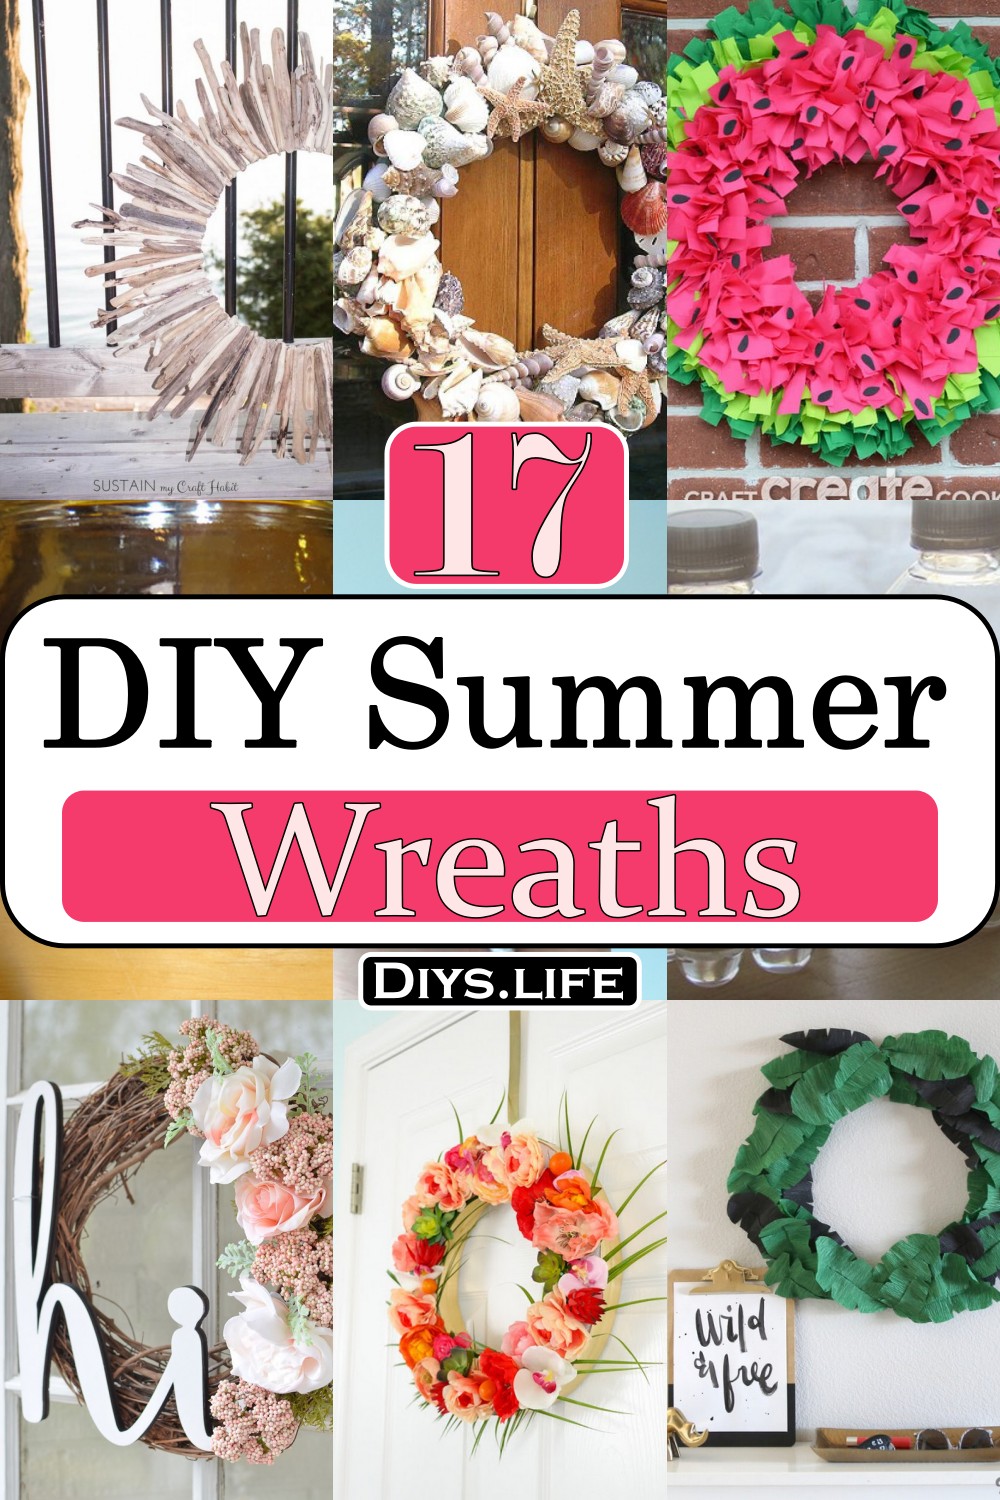 DIY Summer Wreaths